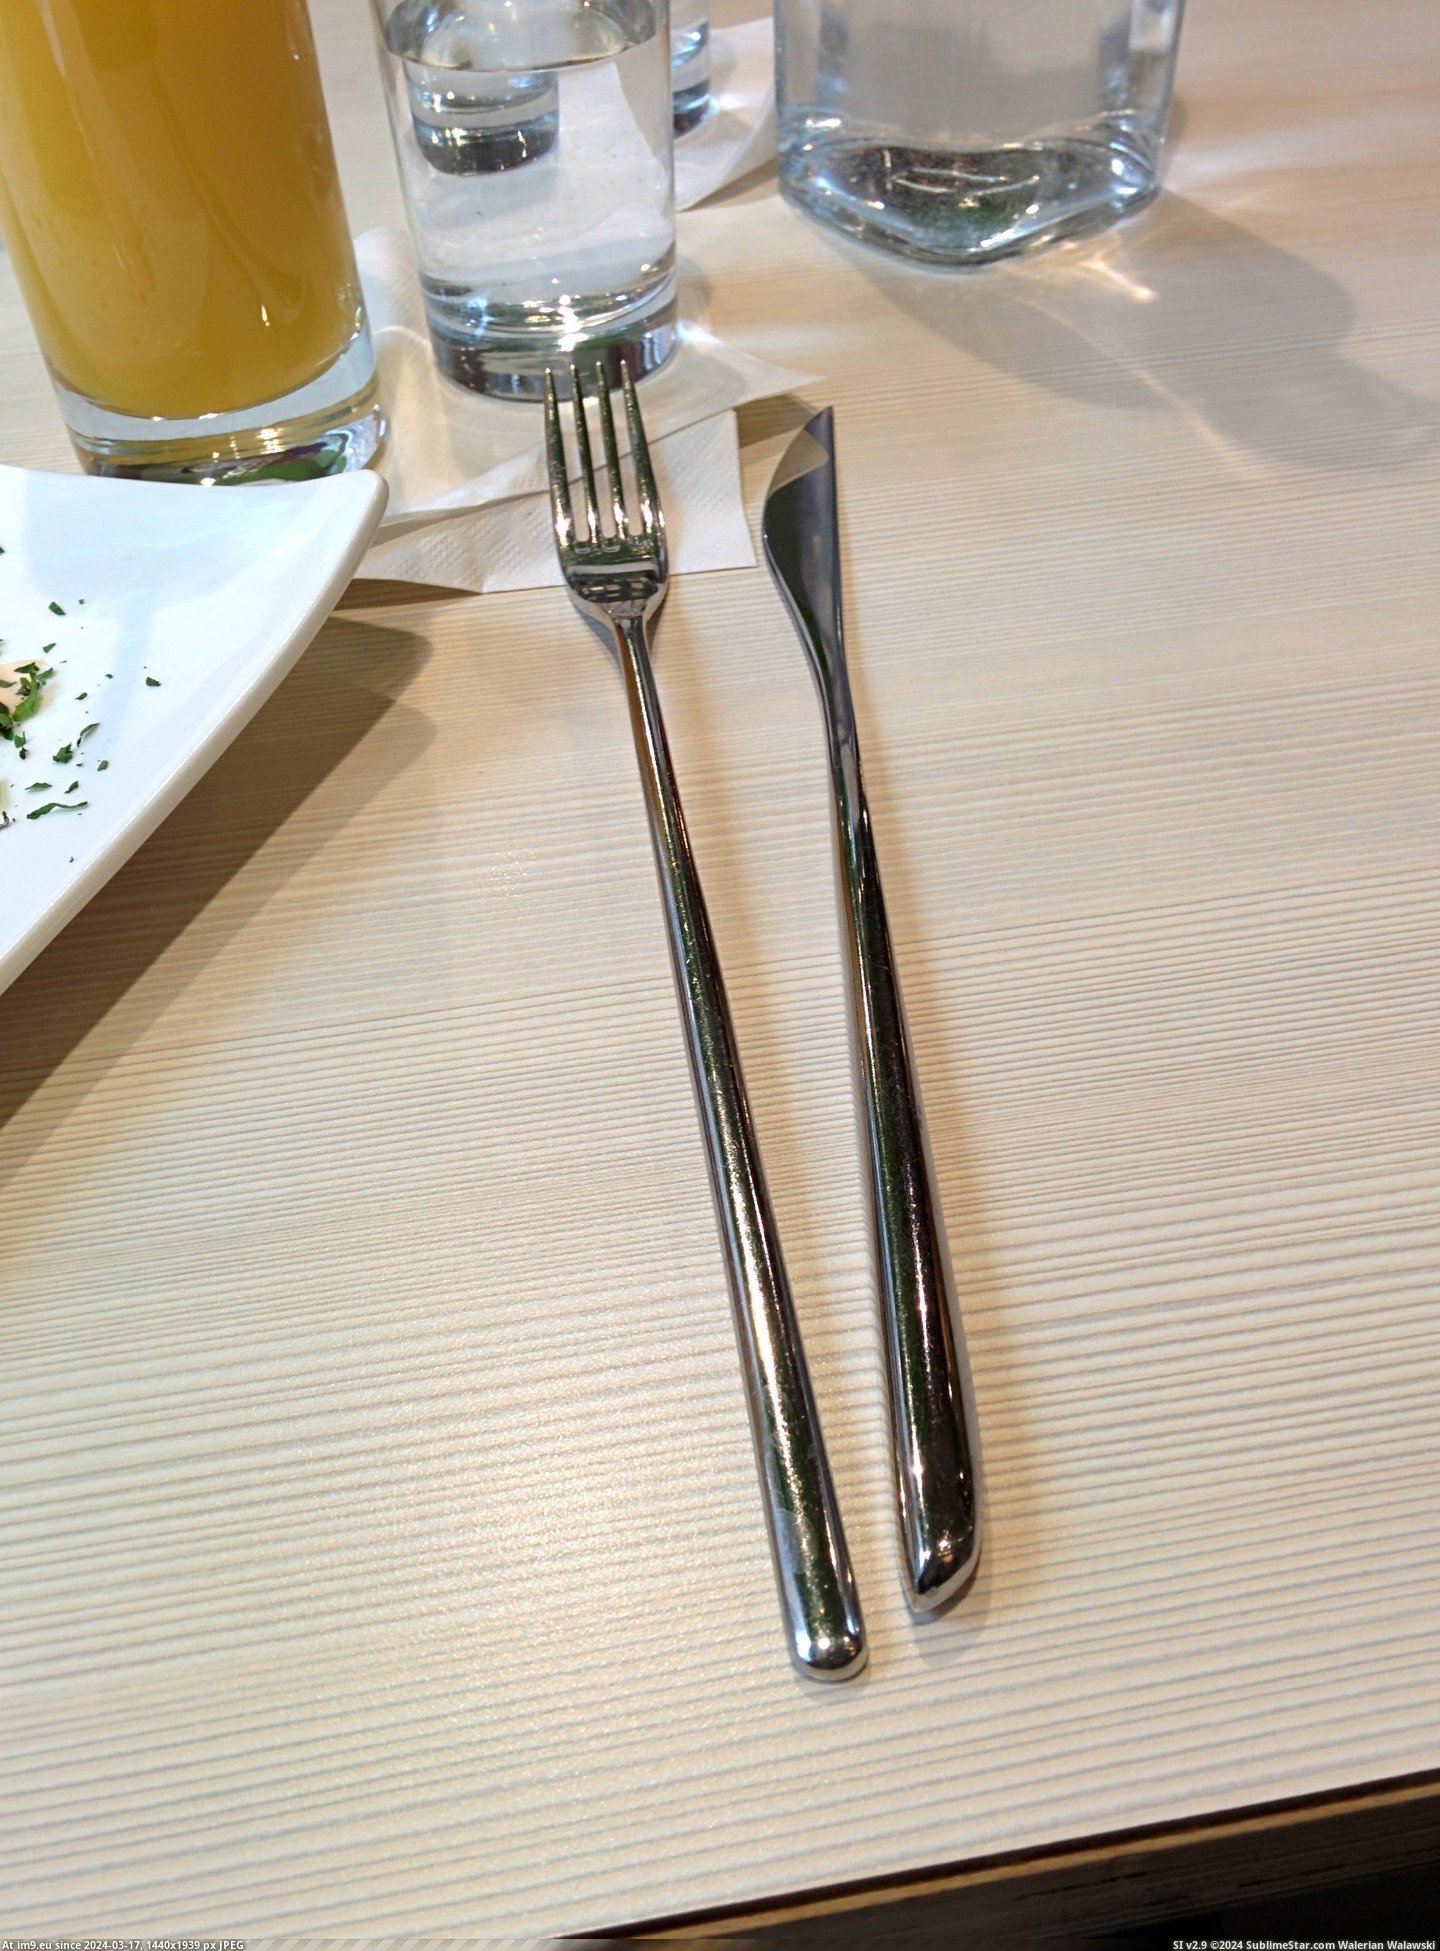 #Restaurant #Knife #Fork #Awkward [Mildlyinteresting] The fork and knife at this restaurant are very awkward Pic. (Bild von album My r/MILDLYINTERESTING favs))